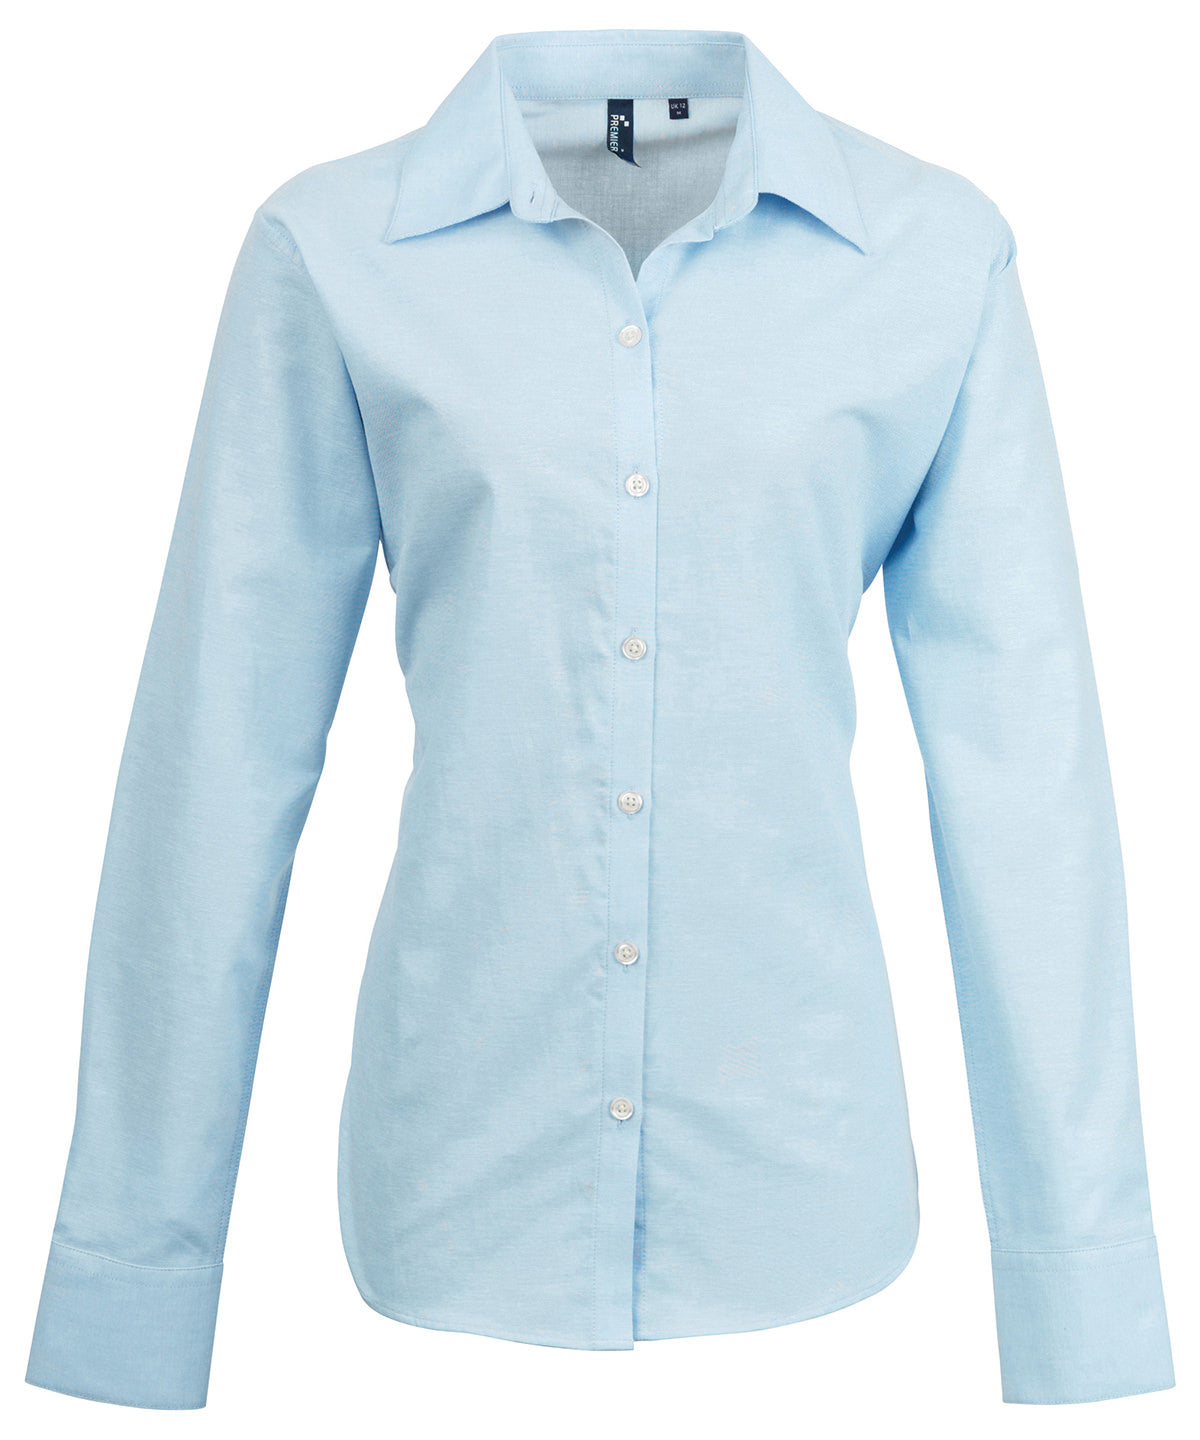 Bolir - Women's Signature Oxford Long Sleeve Shirt